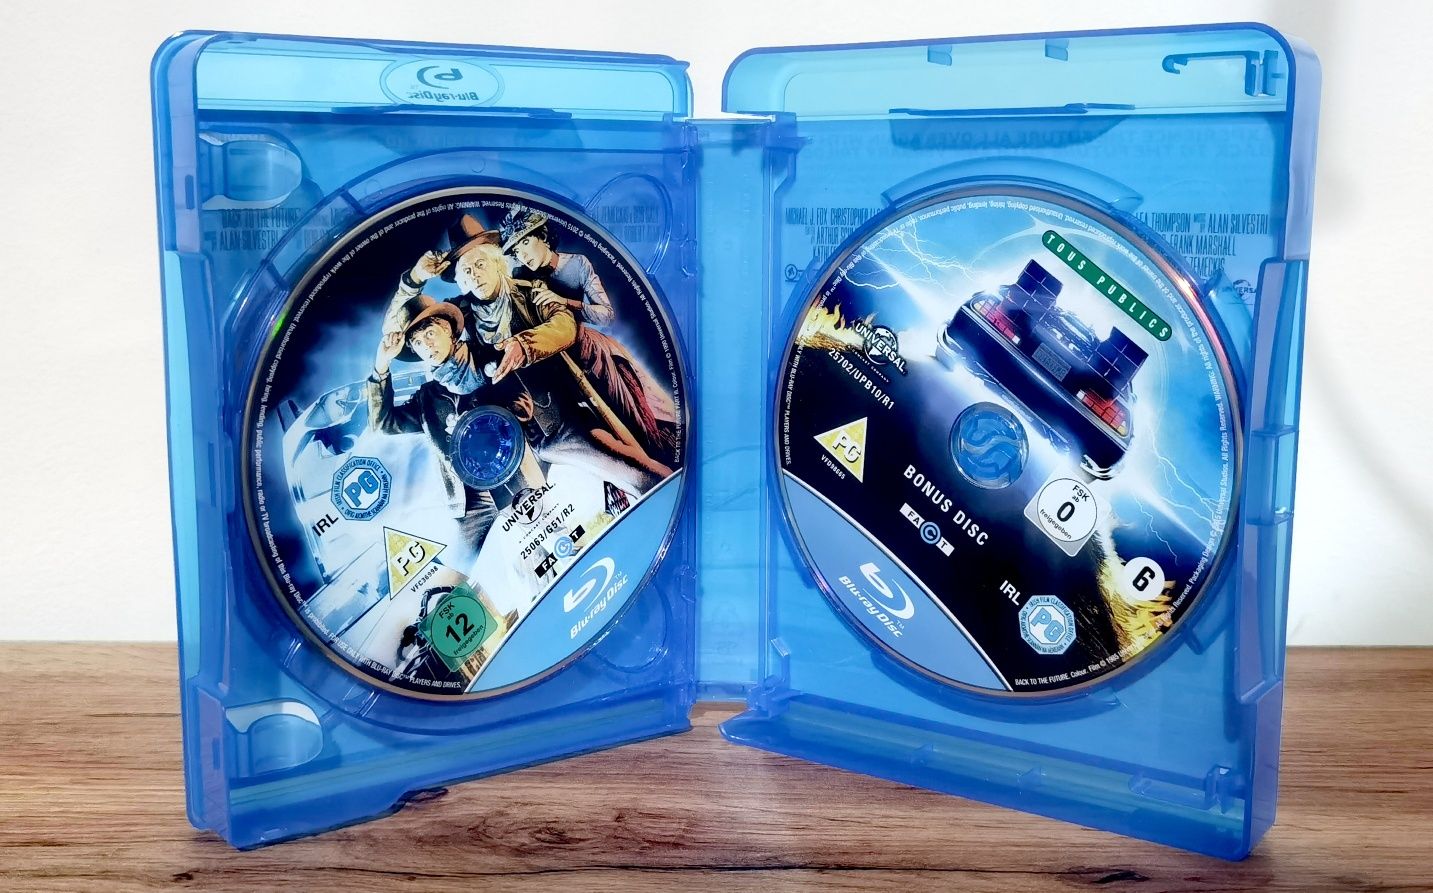 Pack bluray boxset Back to the future trilogy blu ray